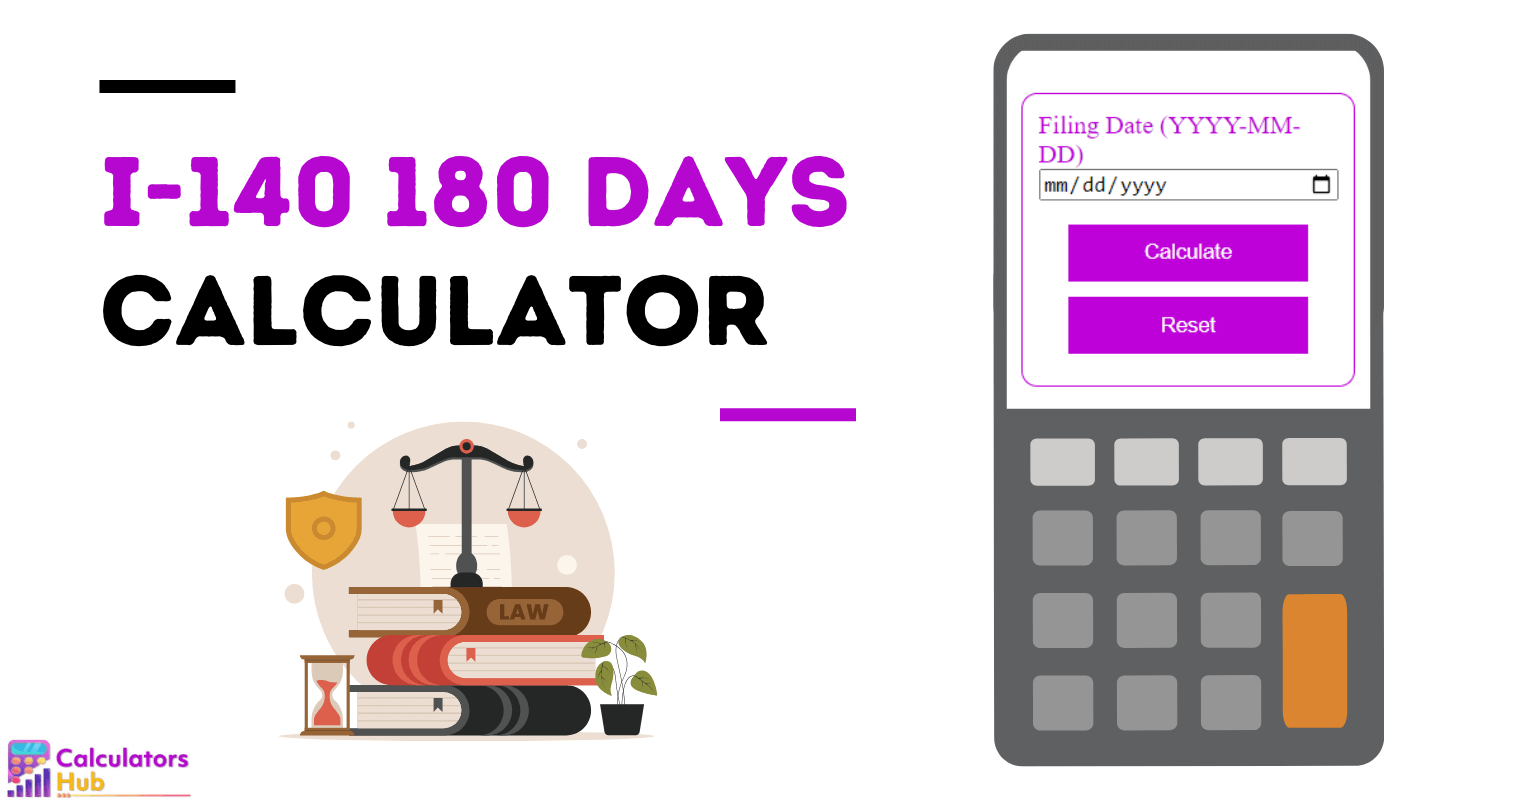 i-140 180 Days Calculator